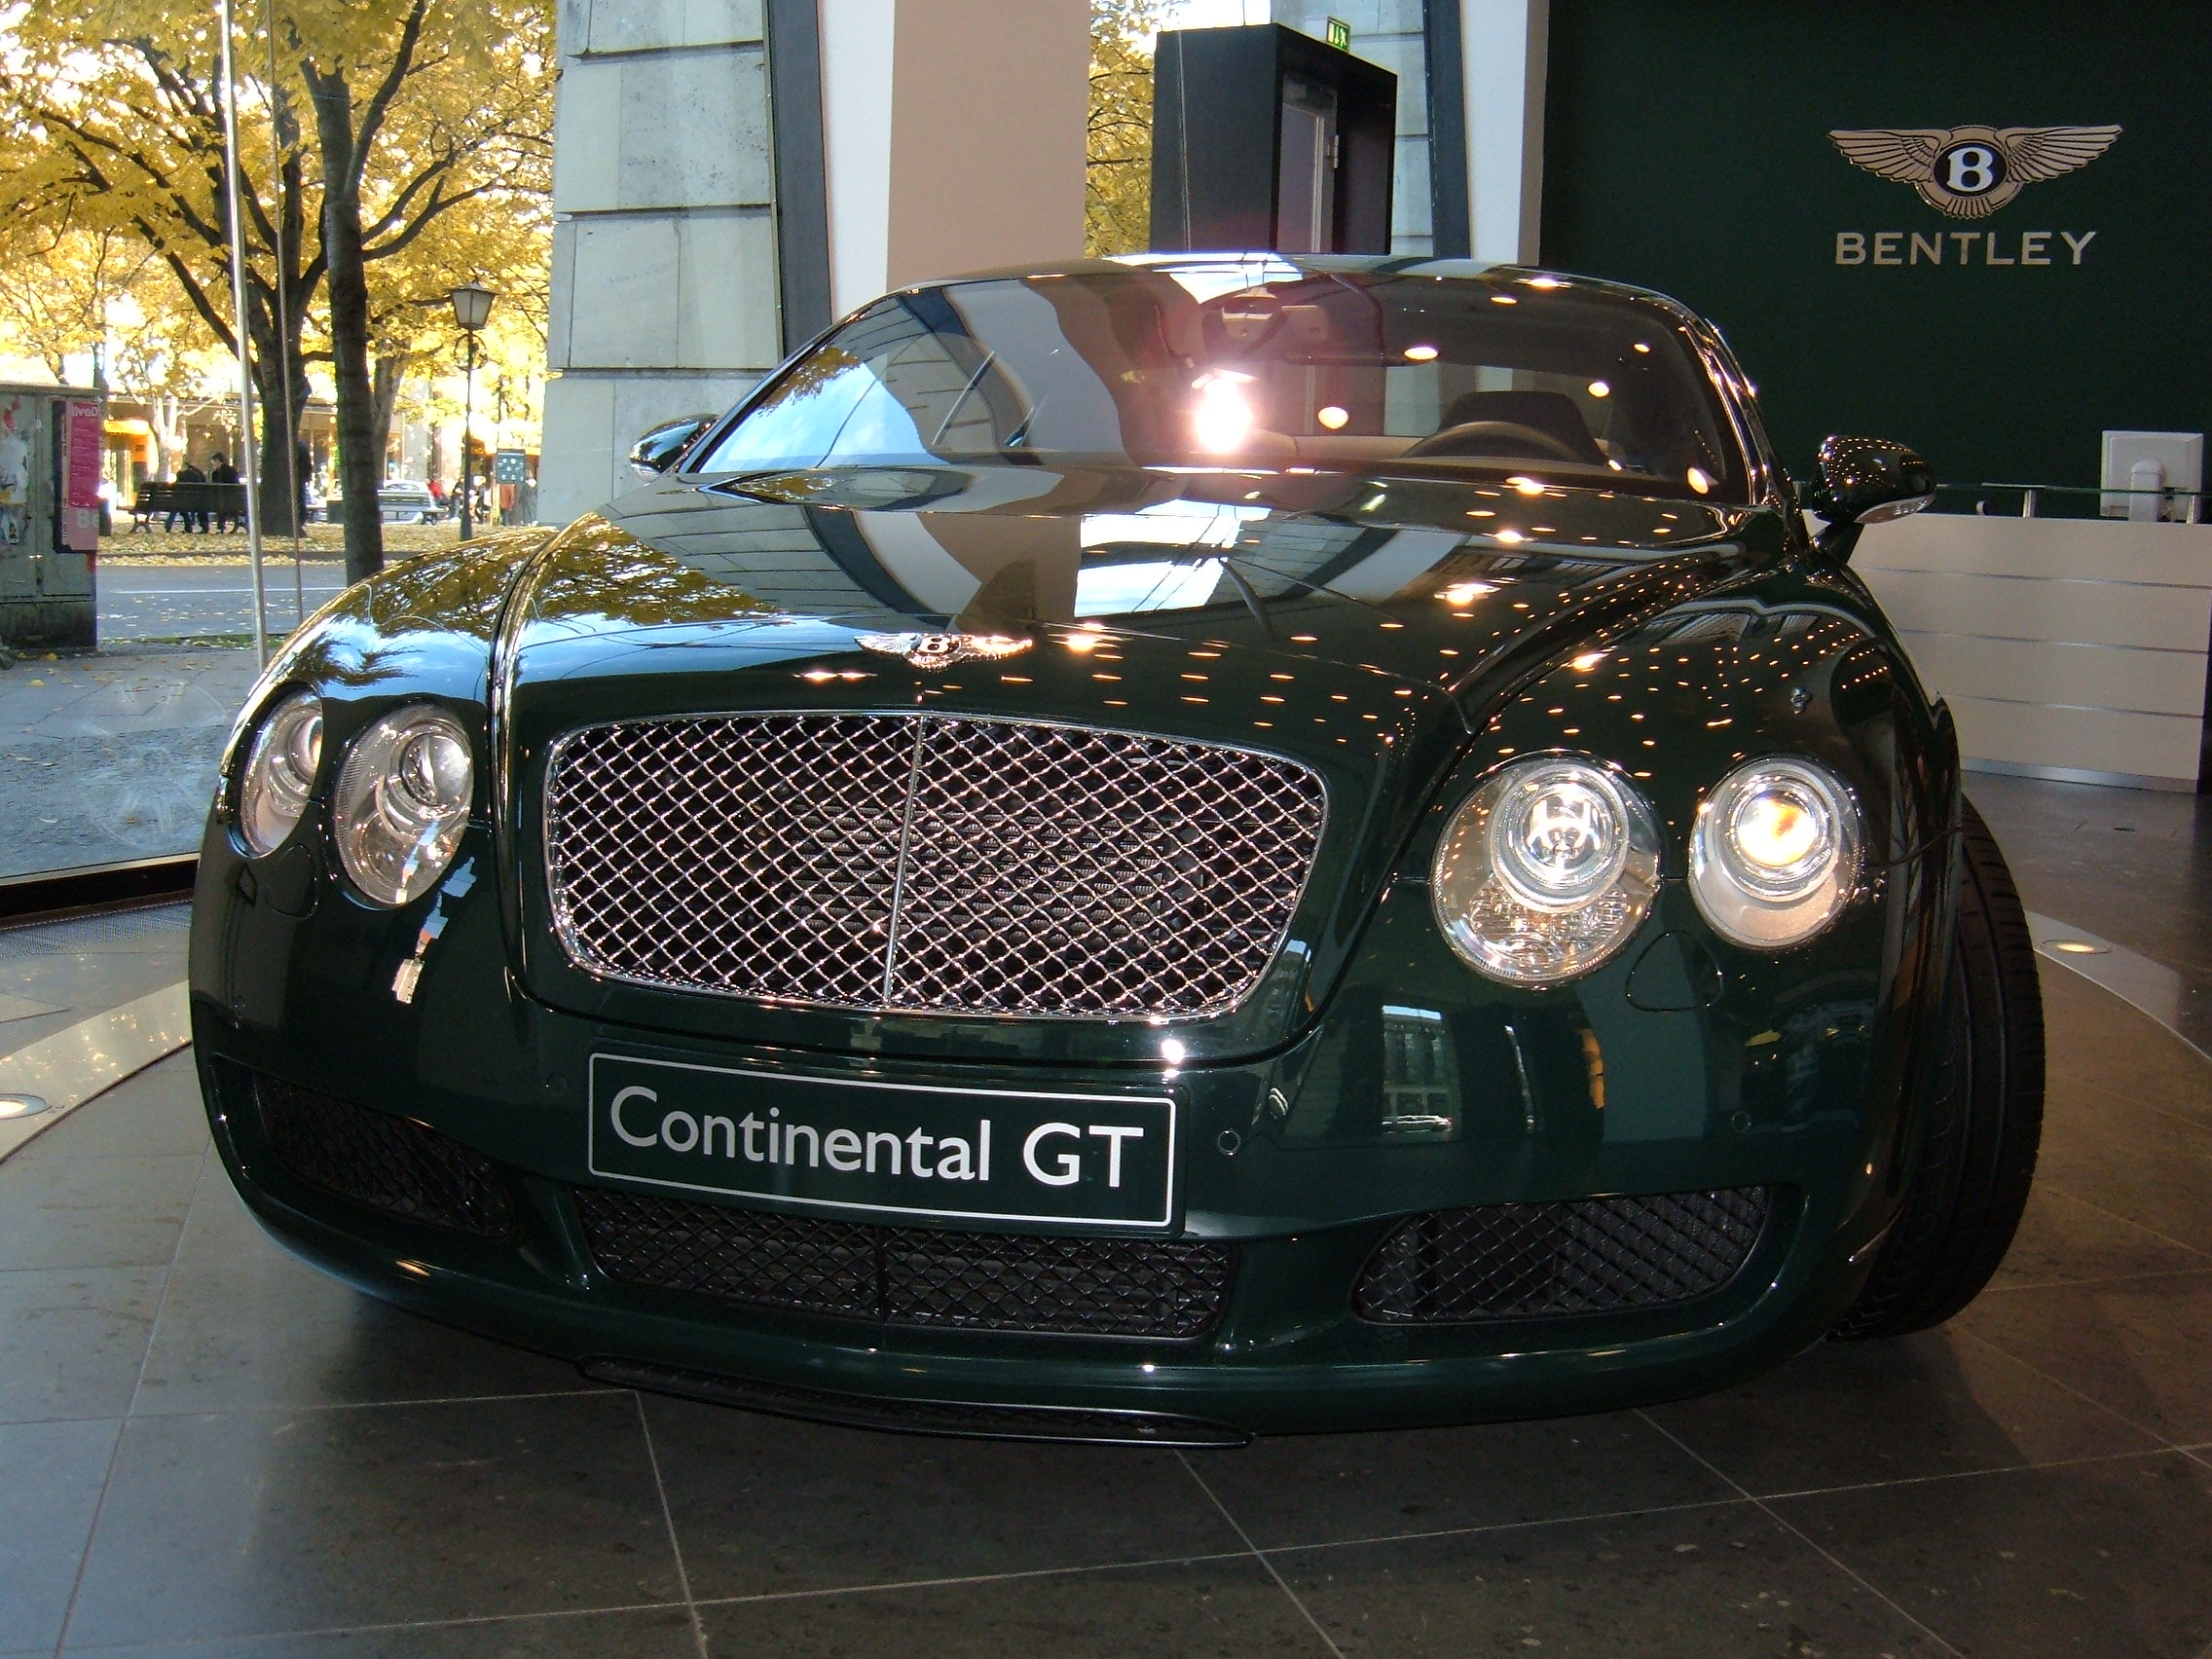 2005 green Bentley Continental GT front